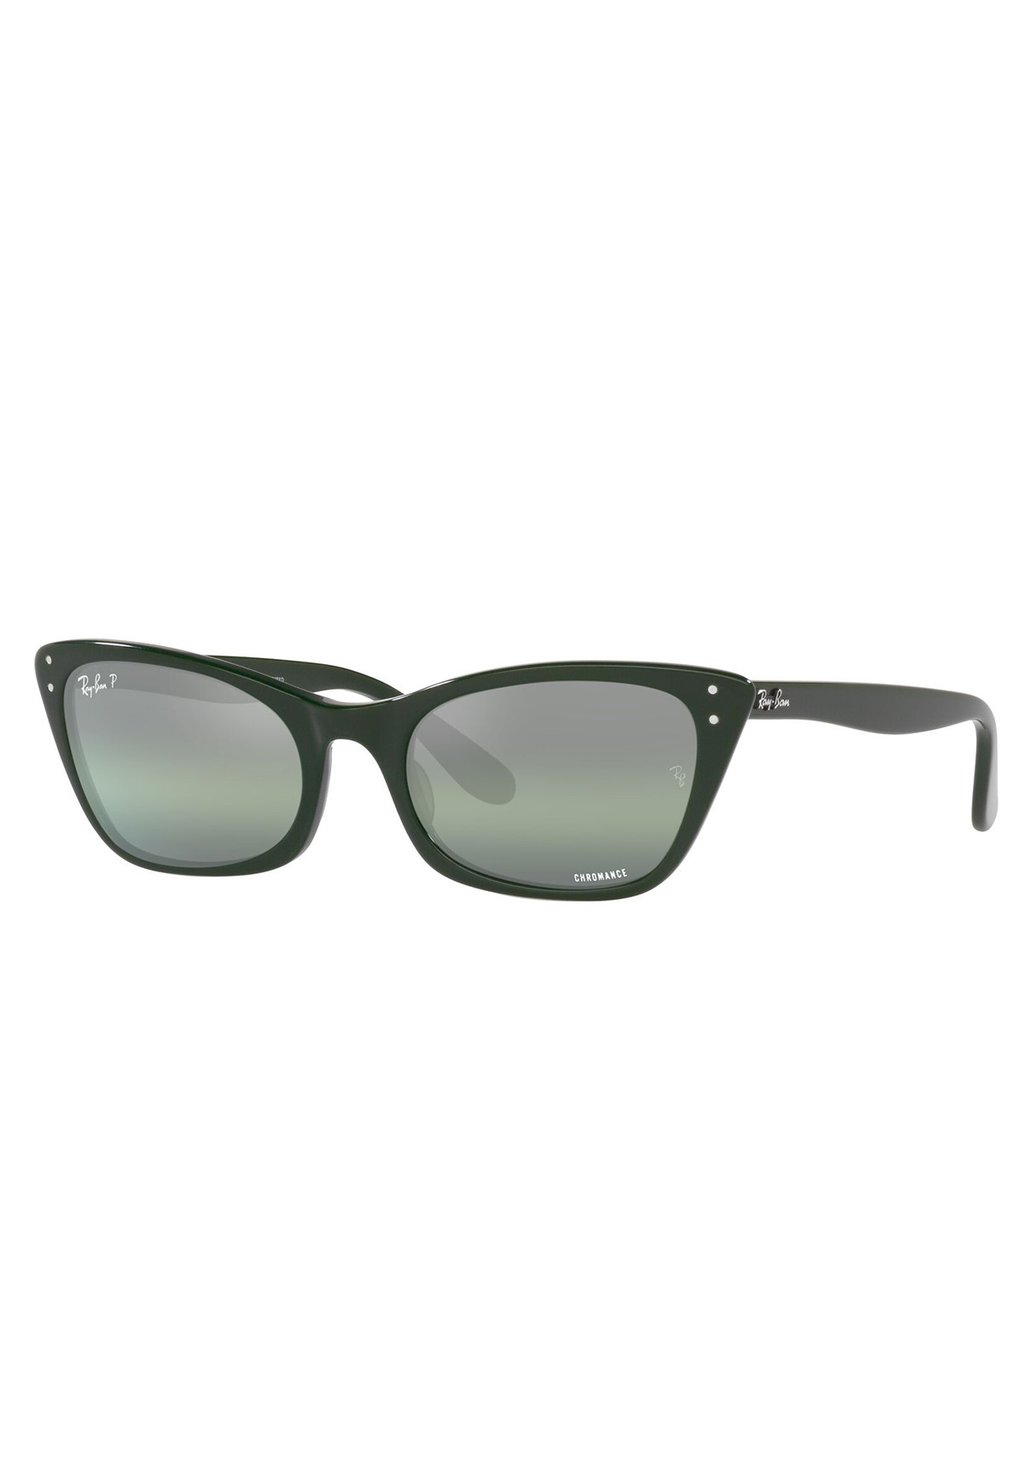 цена Солнцезащитные очки Polarizzati Ray-Ban, зеленый